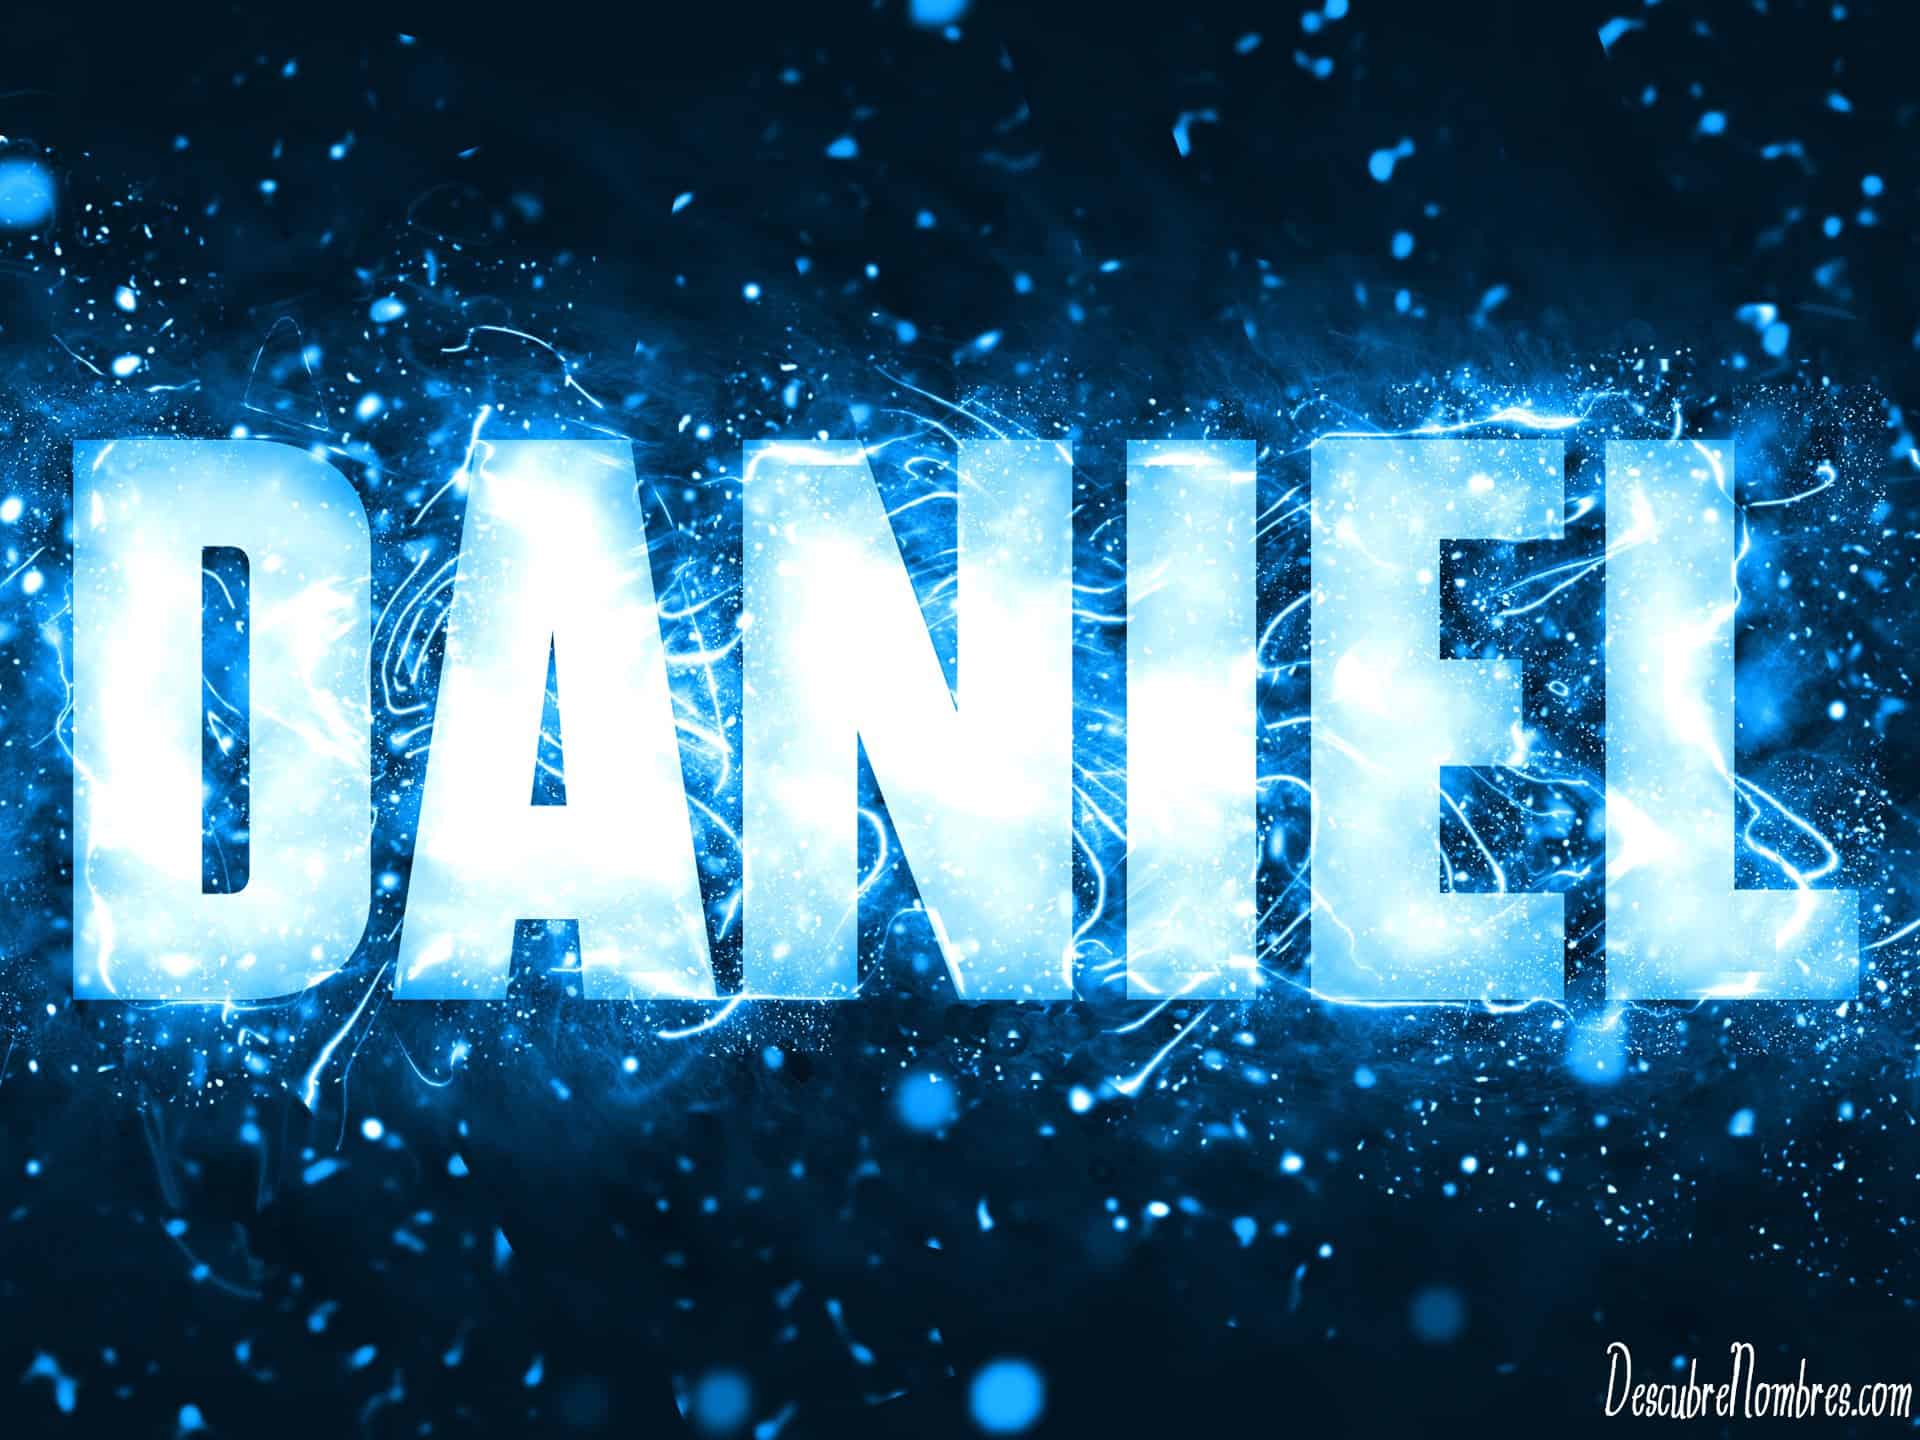 Daniel nombre